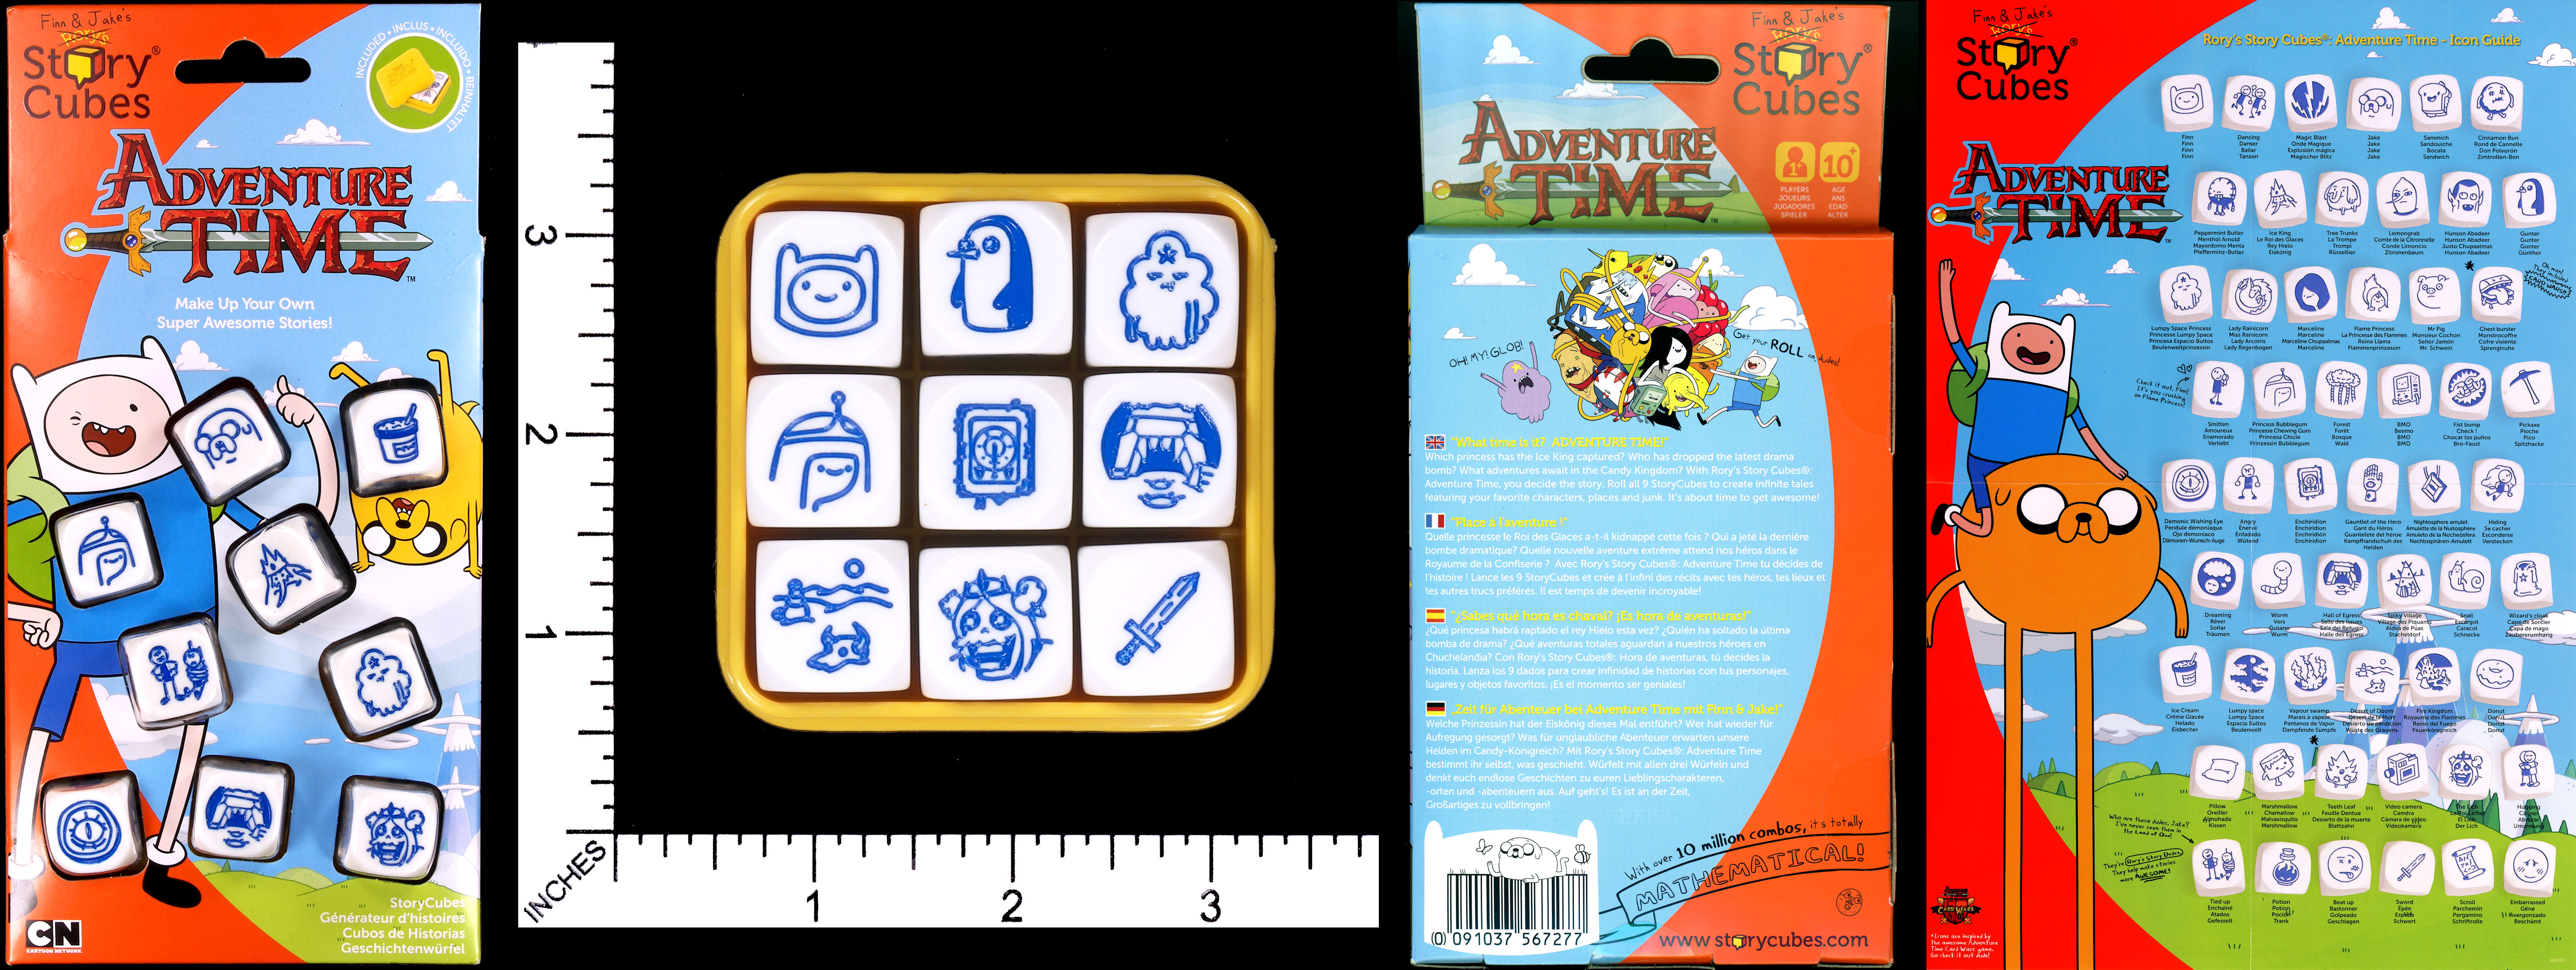 Creativity Hub Rorys Store Cubes Scooby Doo Dice Set Game Diamond Comic Distributors JUN173392